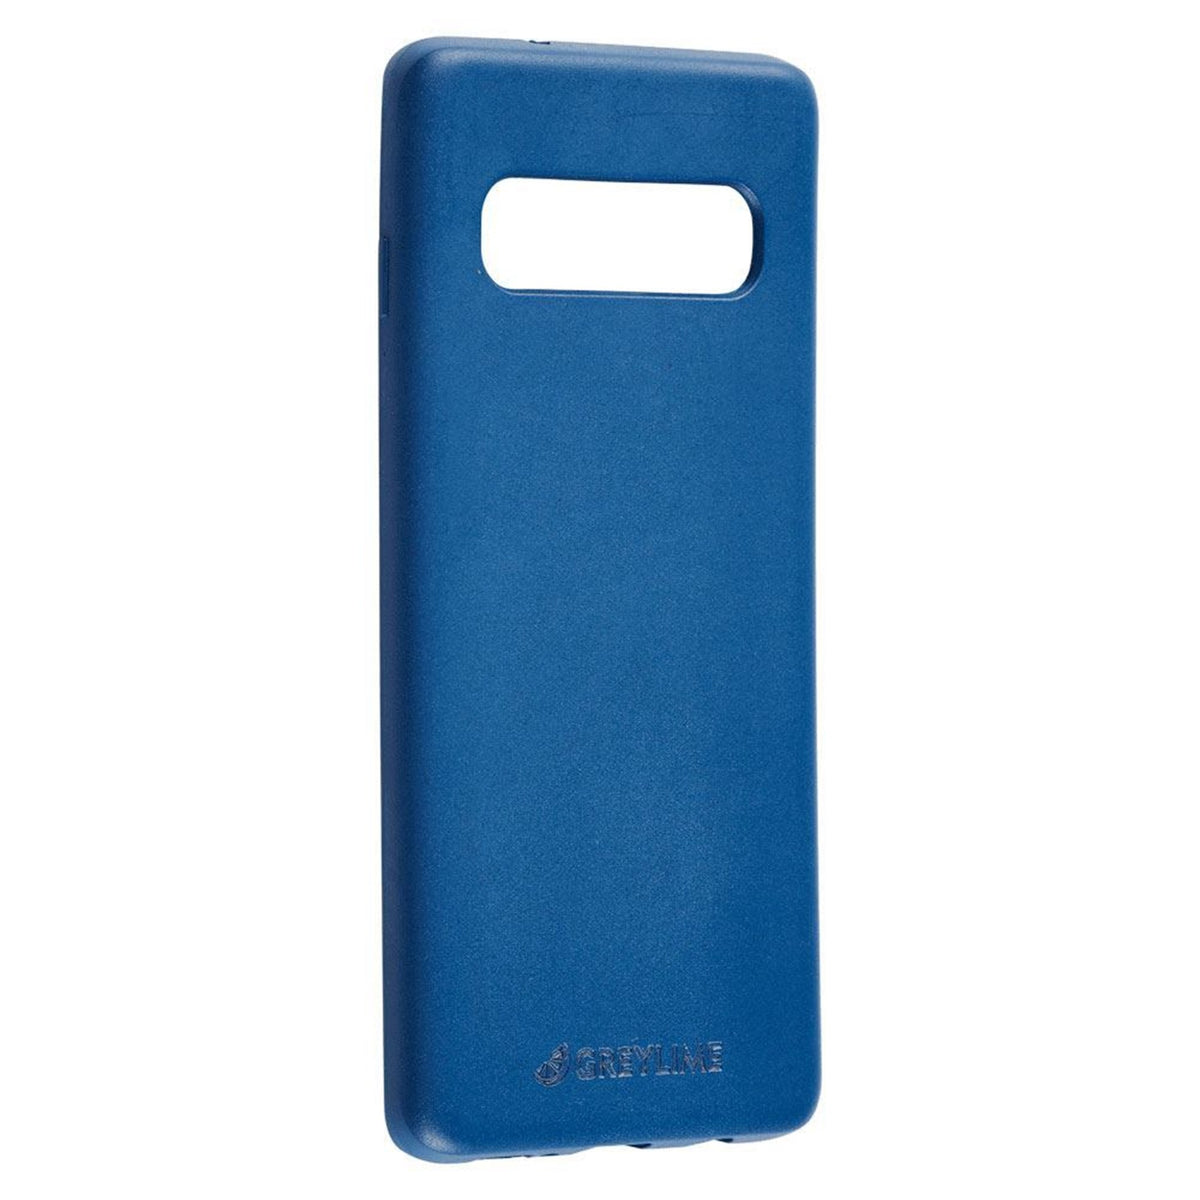 GreyLime-Samsung-Galaxy-S10-biodegradable-cover-Navy-Blue-COSAM1003-V1.jpg